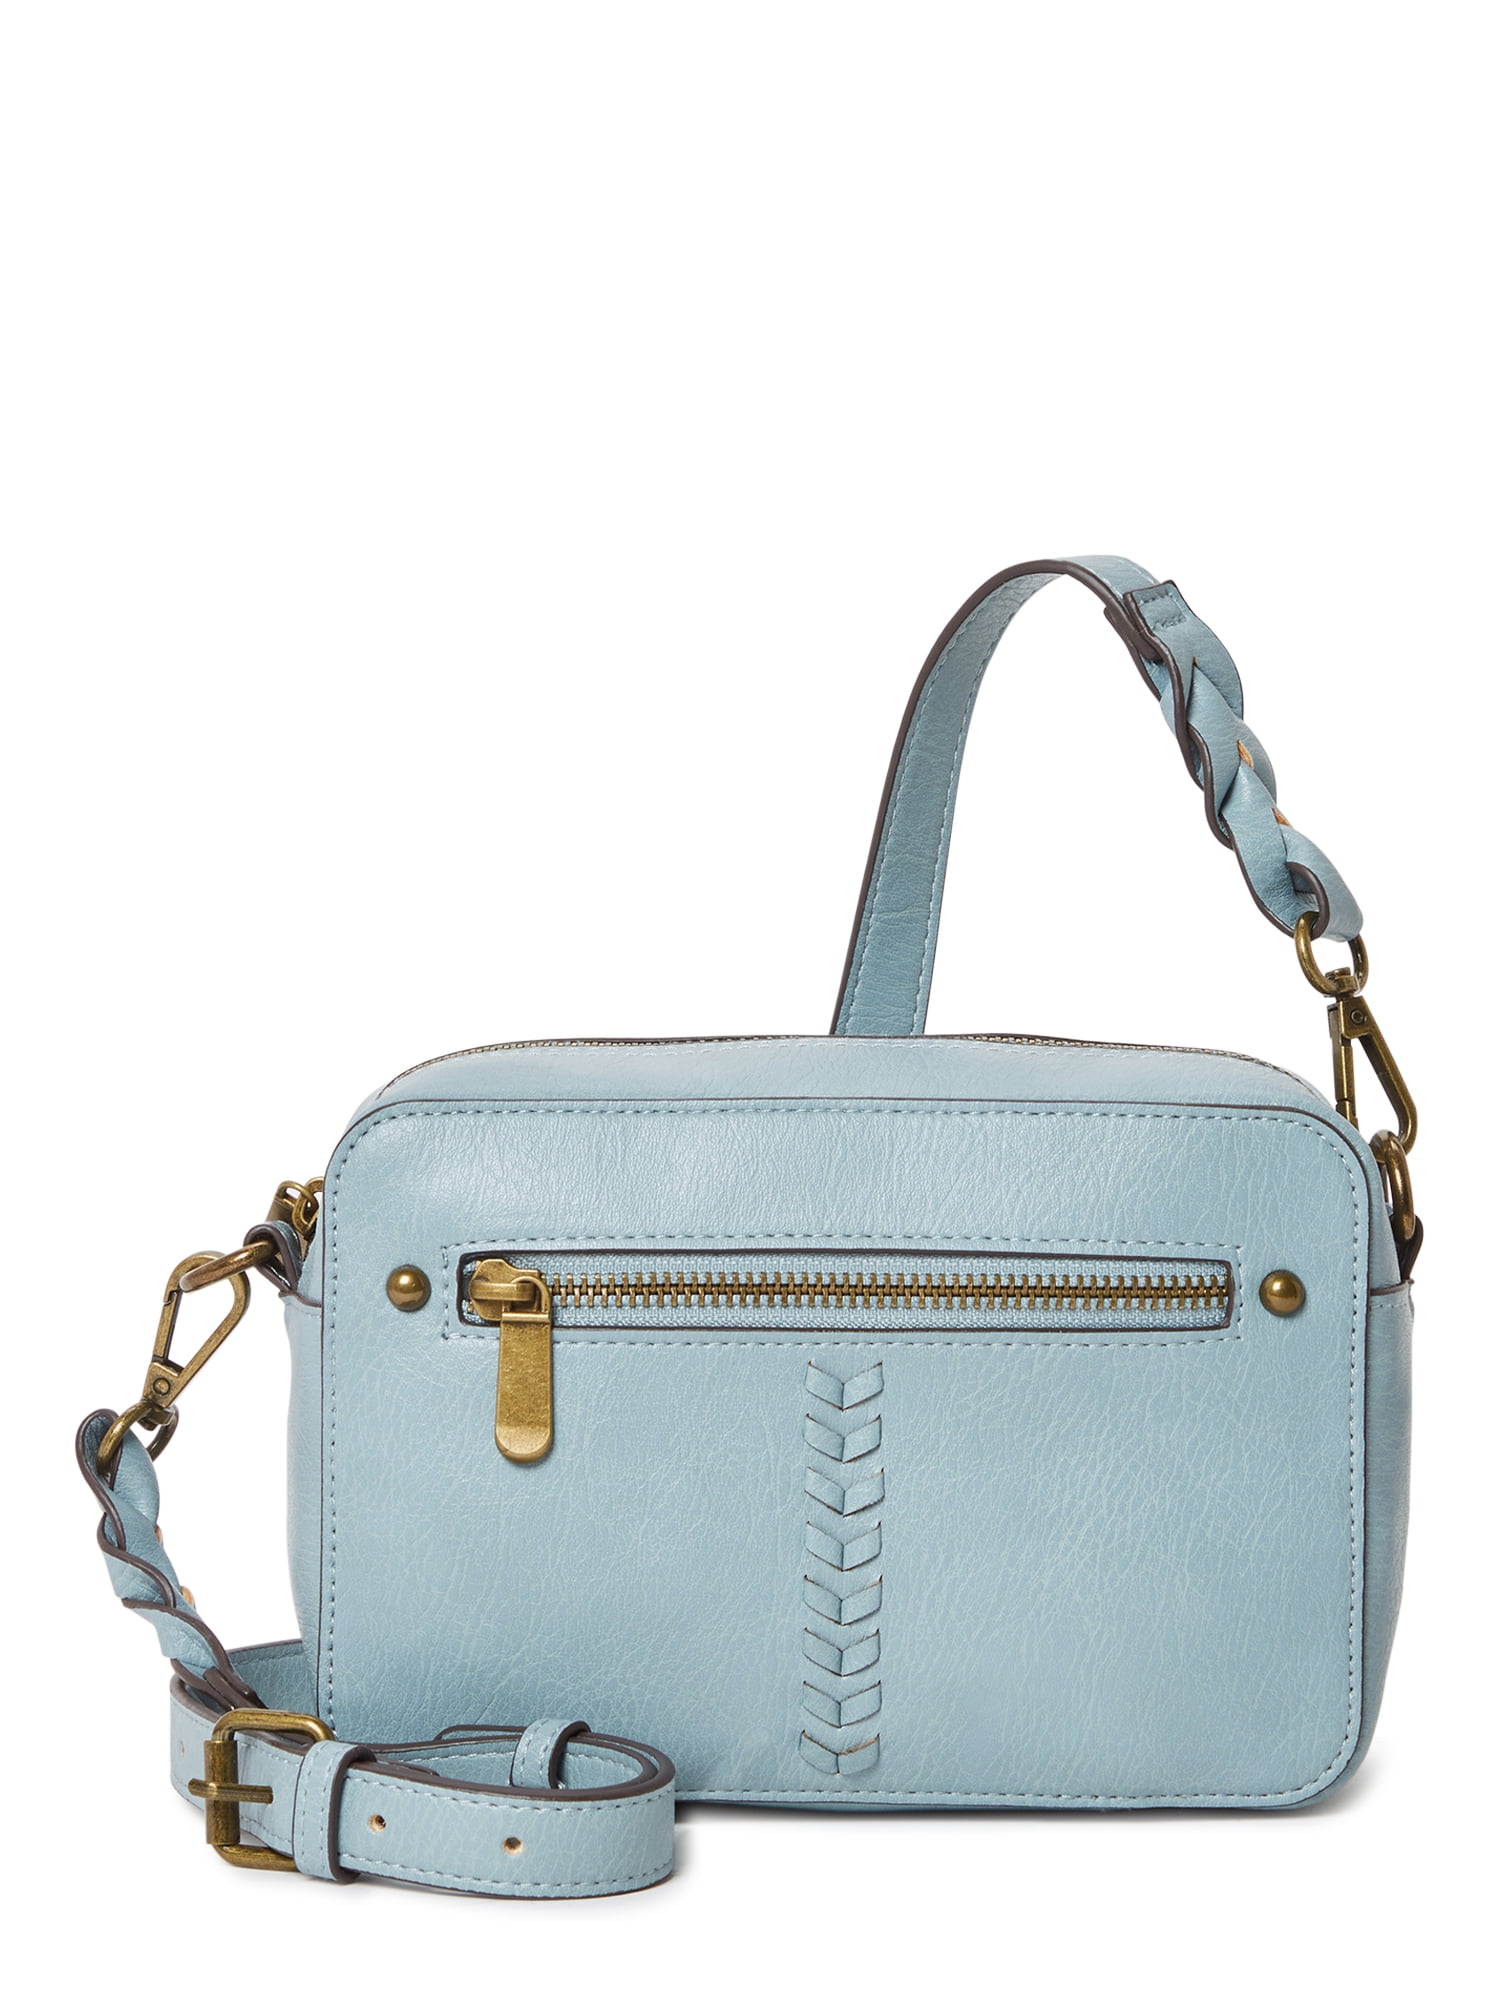 Why Women Love Luxury Handbags – HG Bags Online